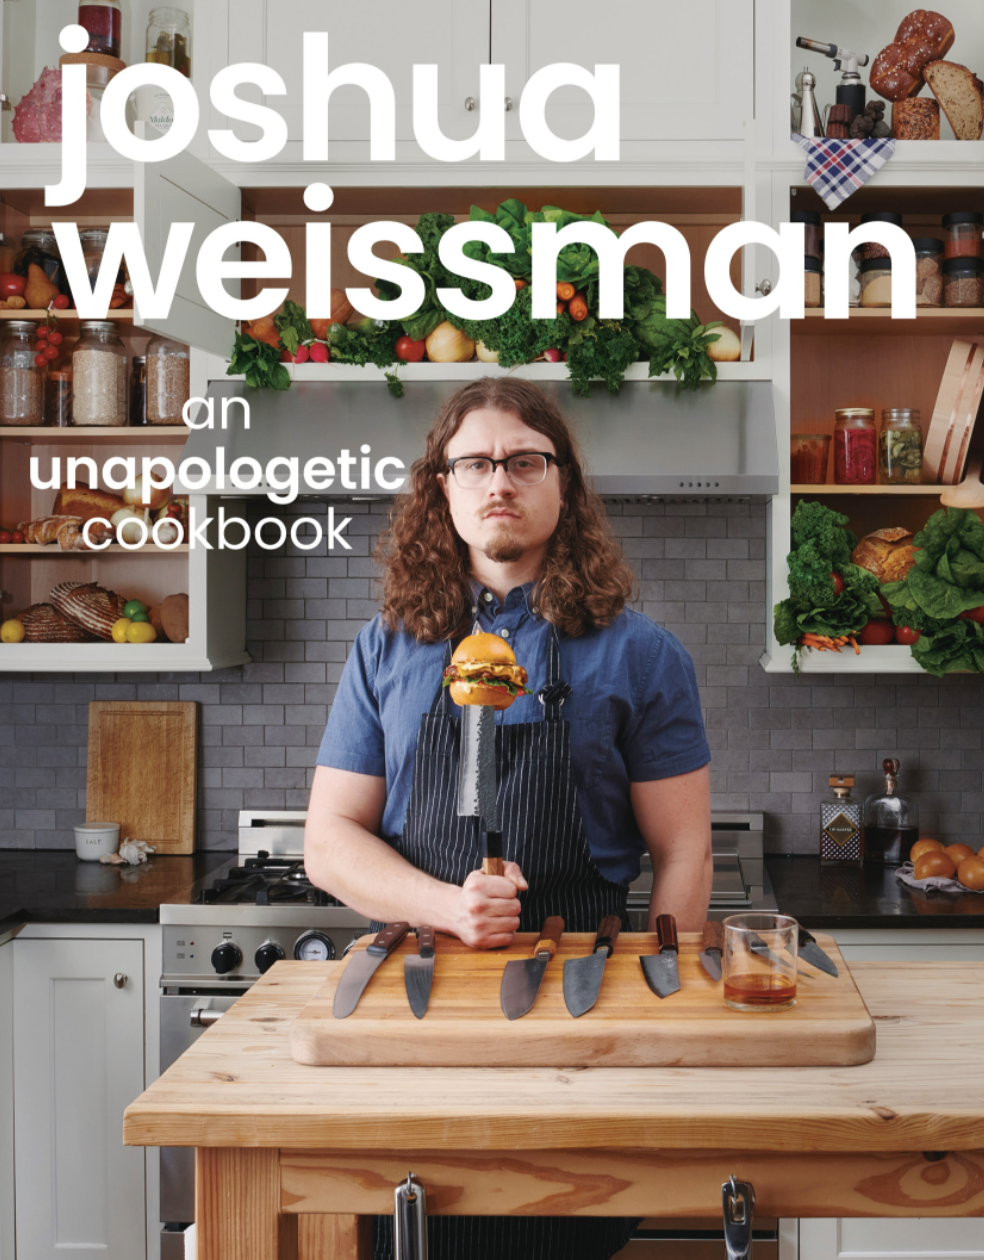 joshua weissman cookbook